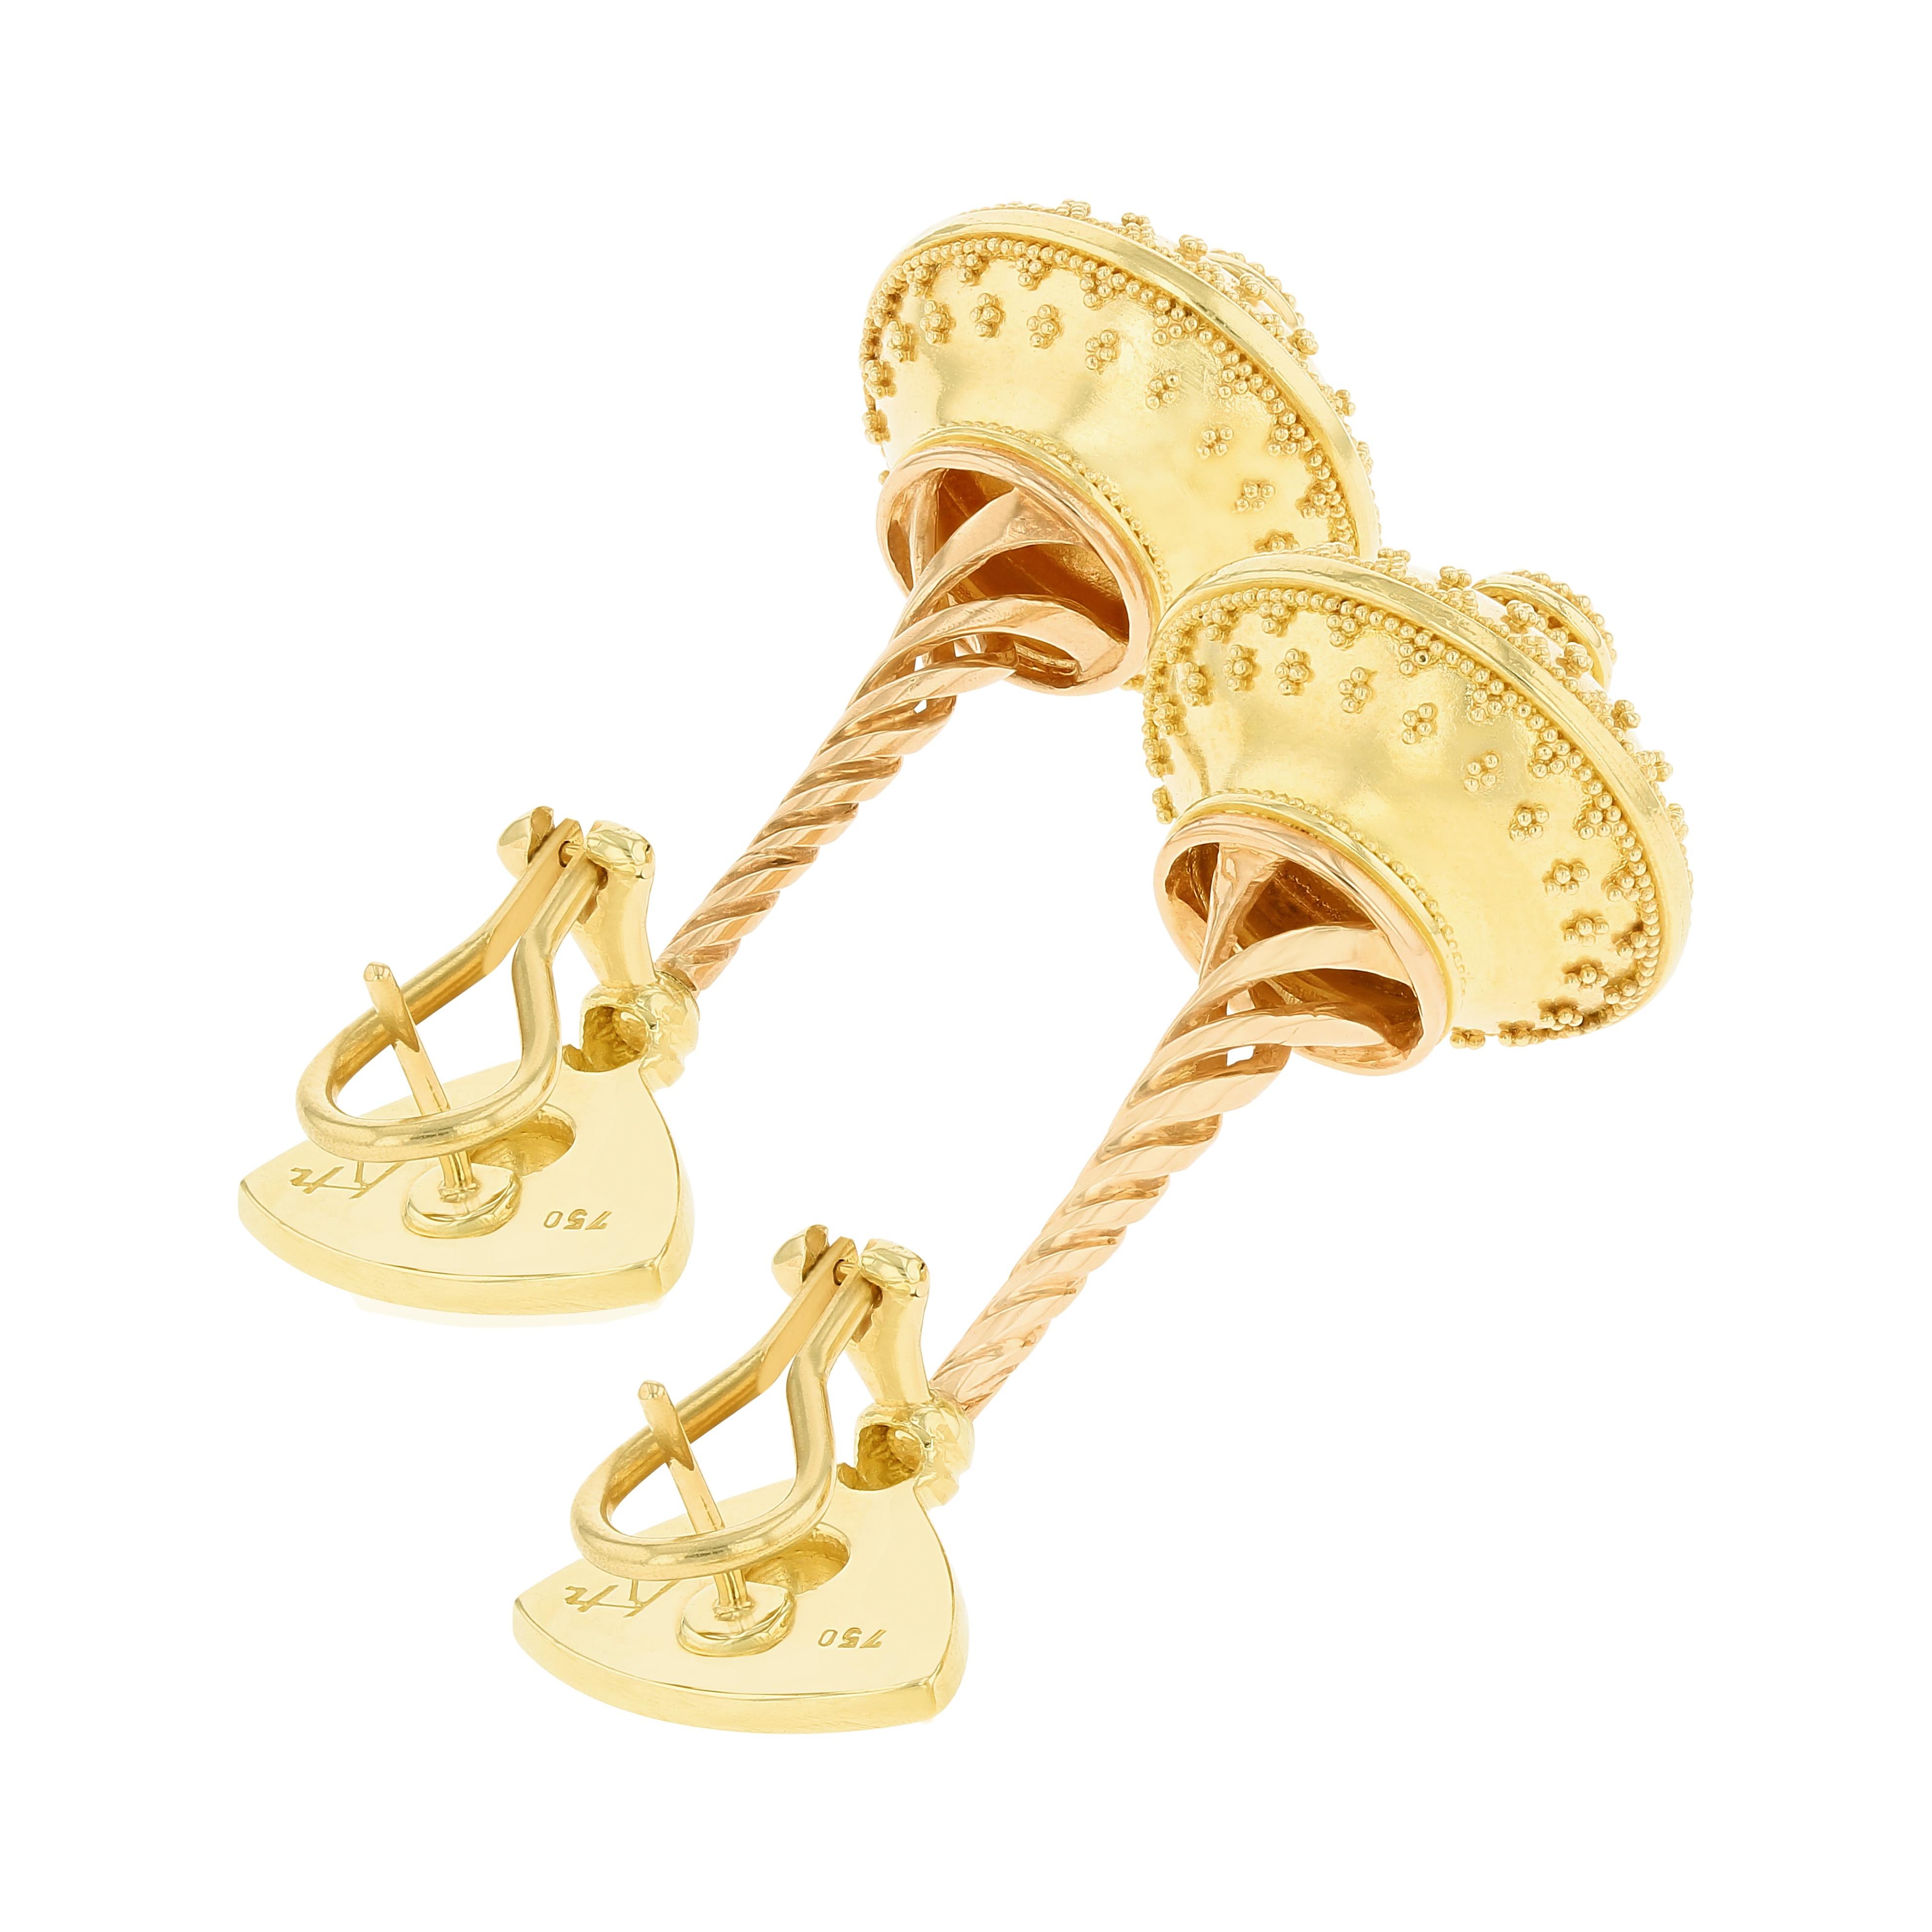 Kent Raible 18 Karat Gold Flying Saucer Chandelier Earrings with Granulation For Sale 2